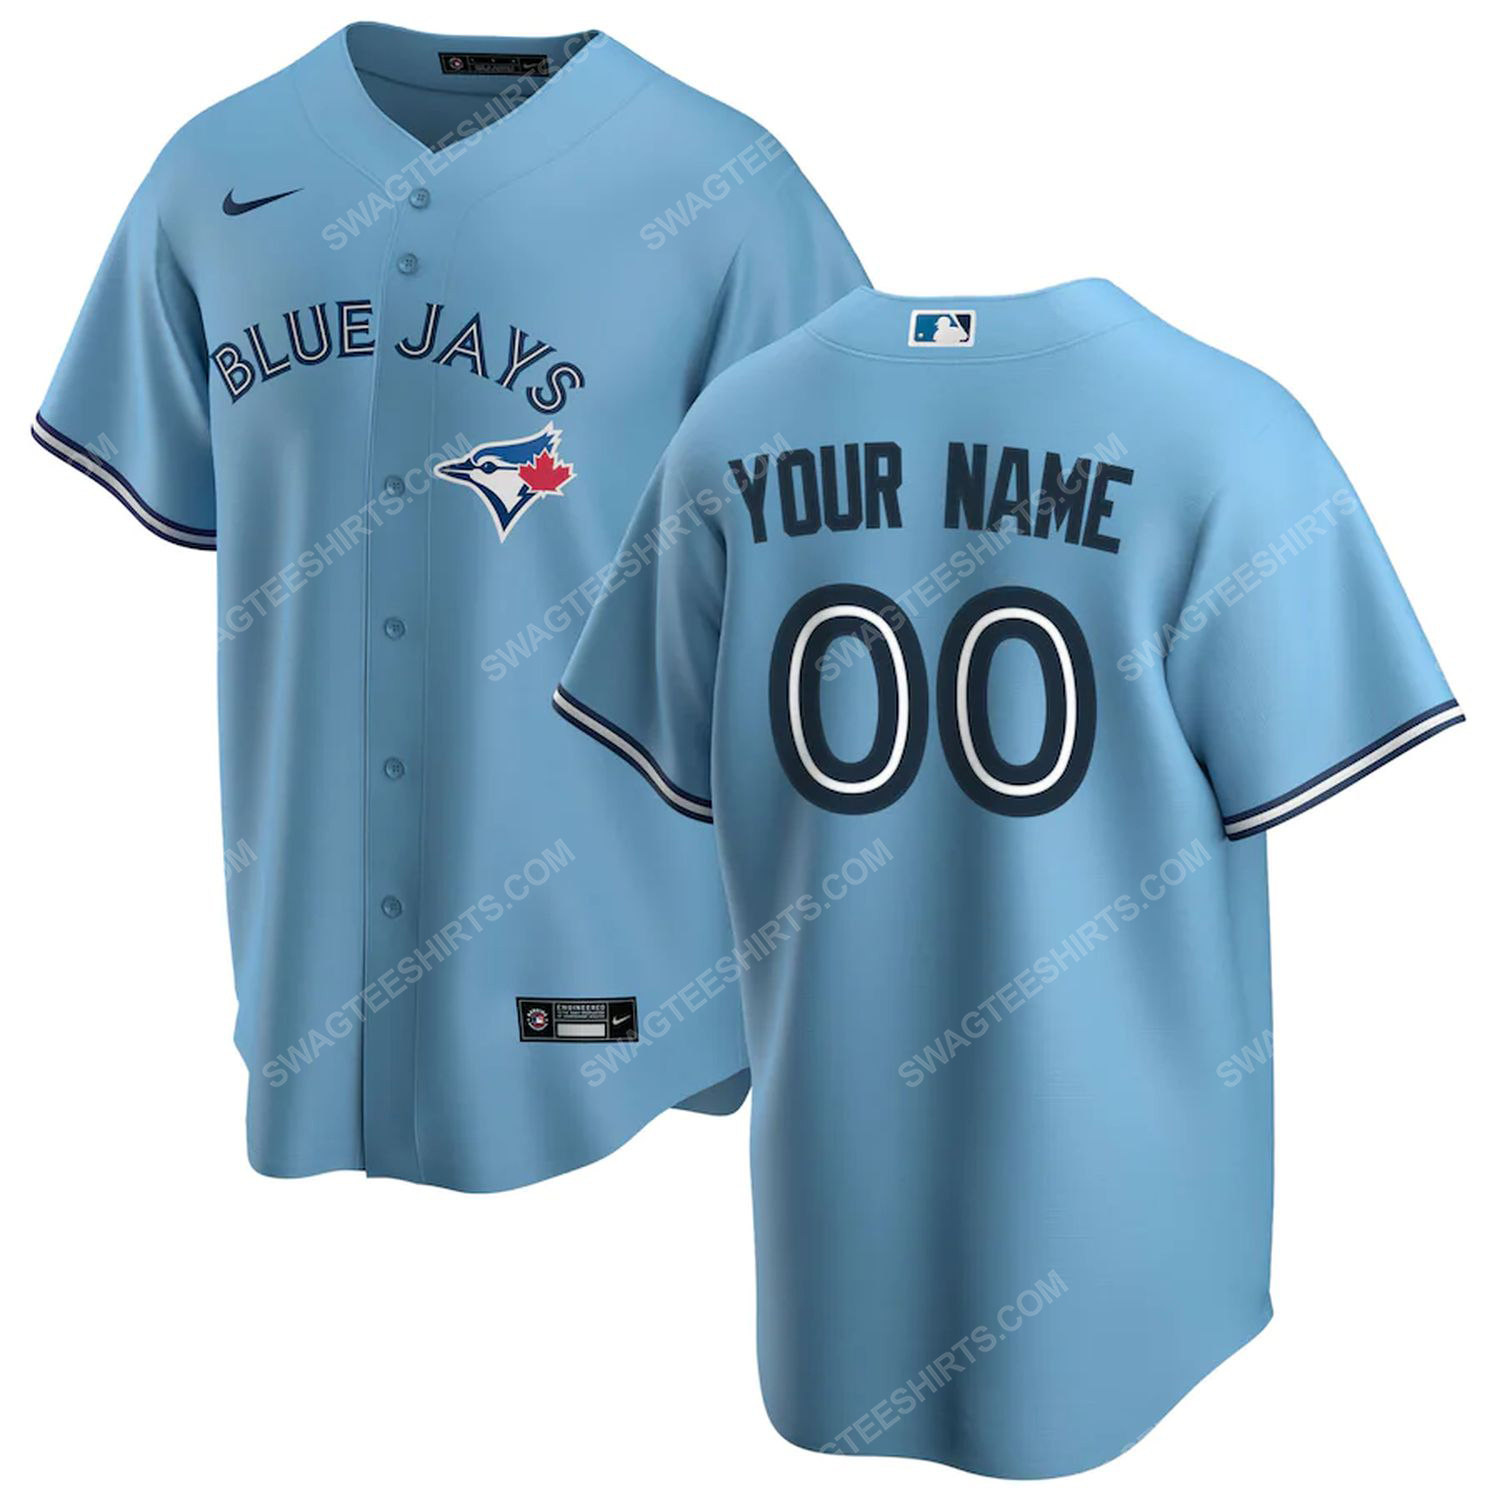 Personalized mlb toronto blue jays team baseball jersey-light blue